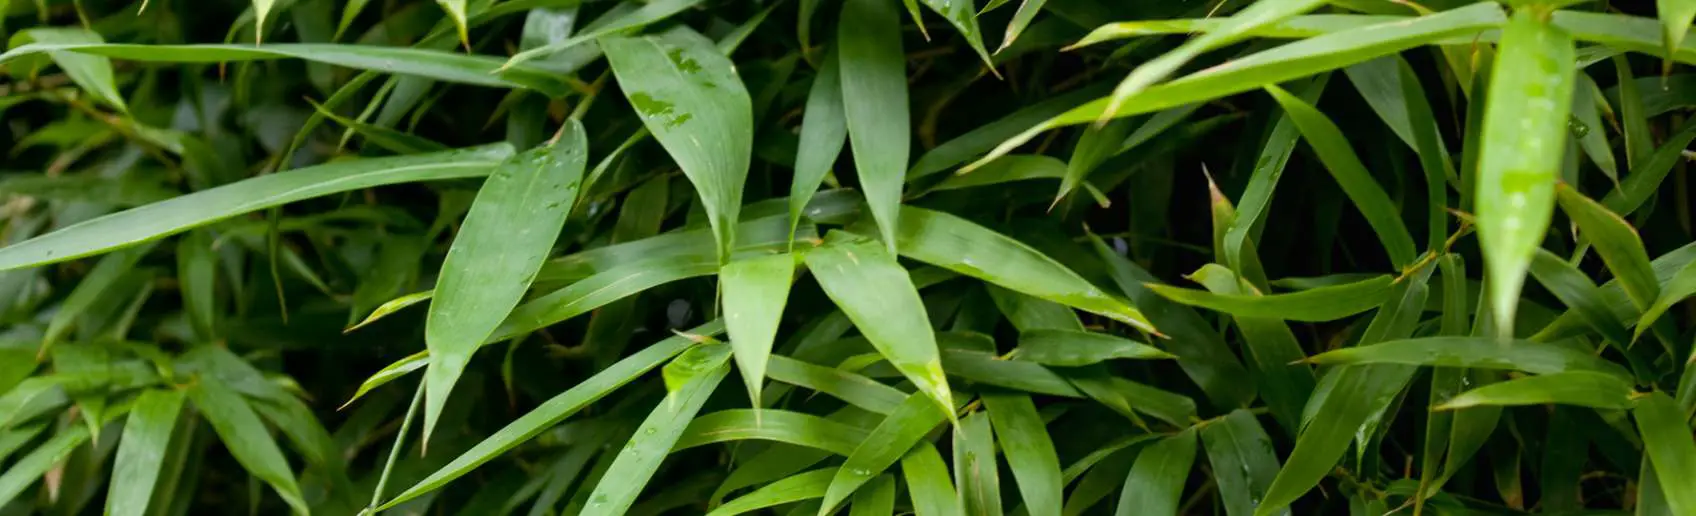 Bamboo leaf banner